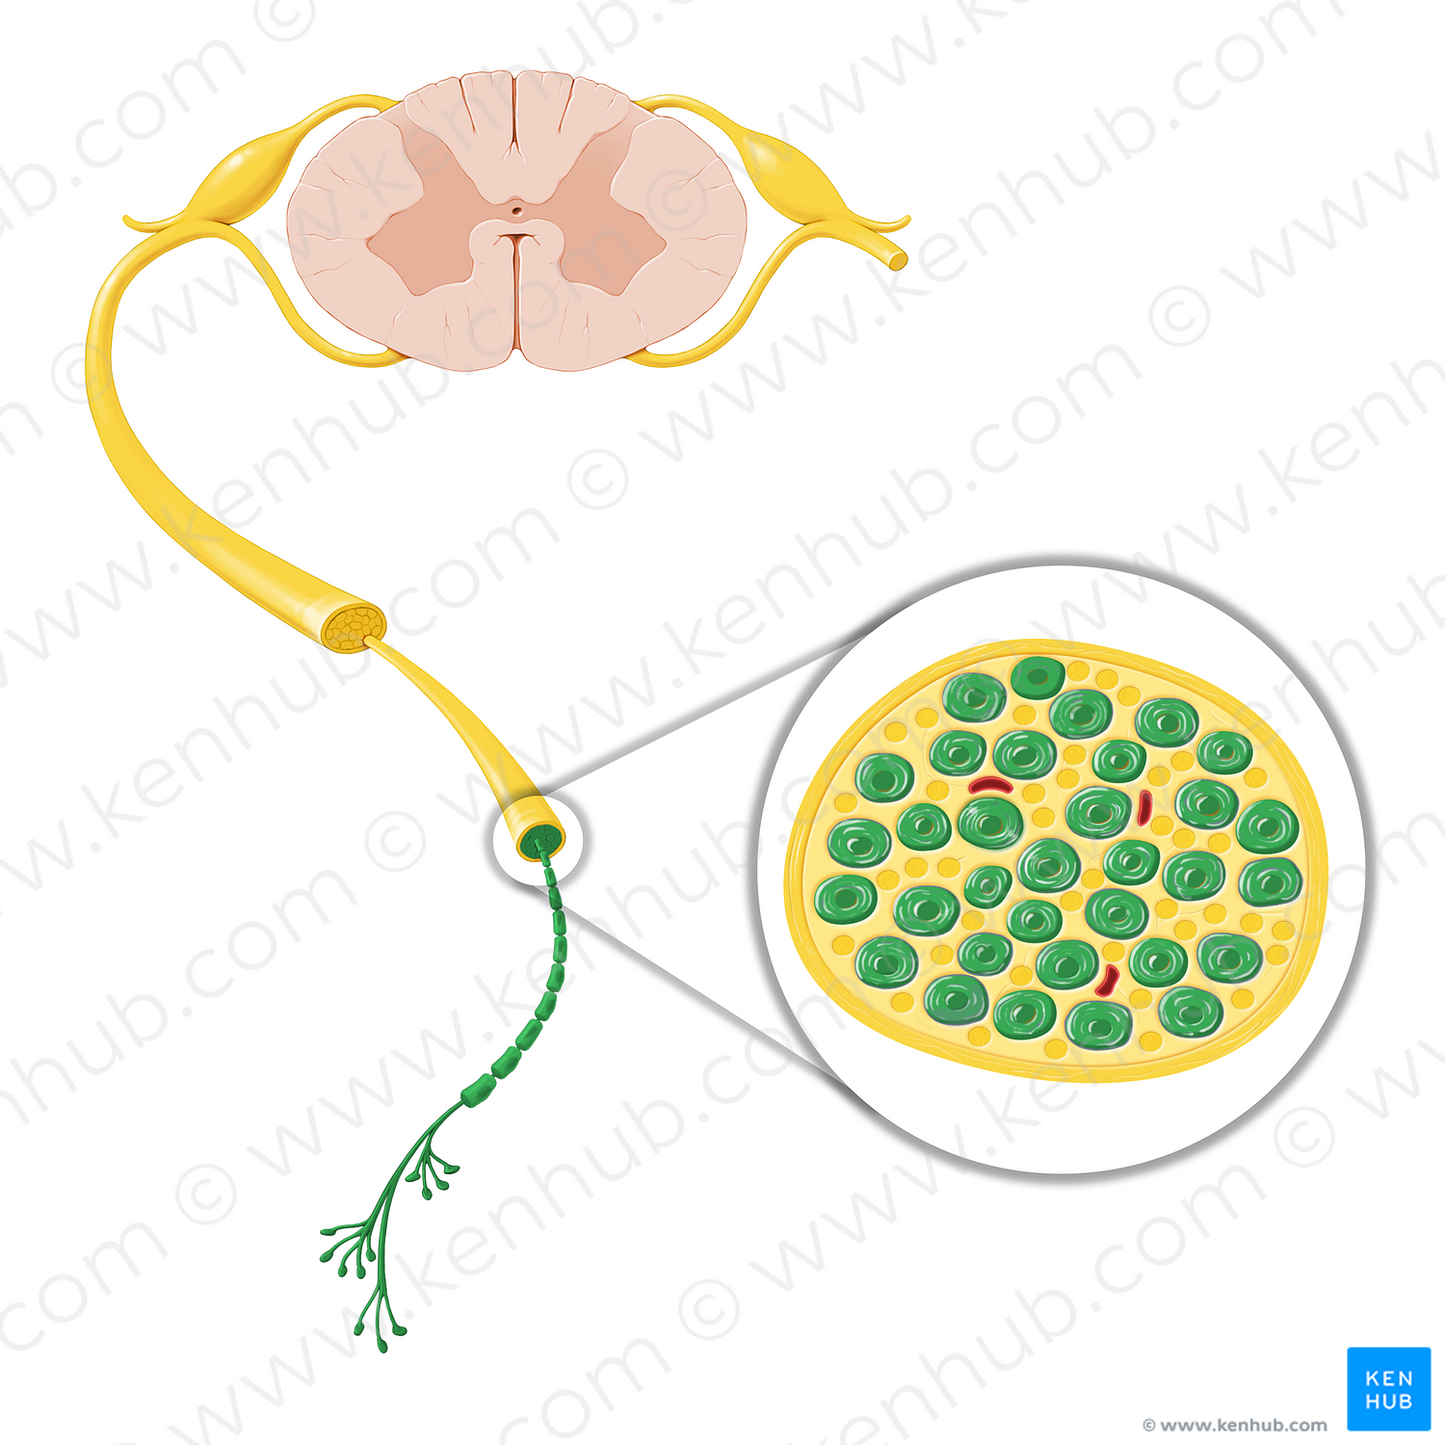 Peripheral myelinated axon/nerve fiber (#20767)